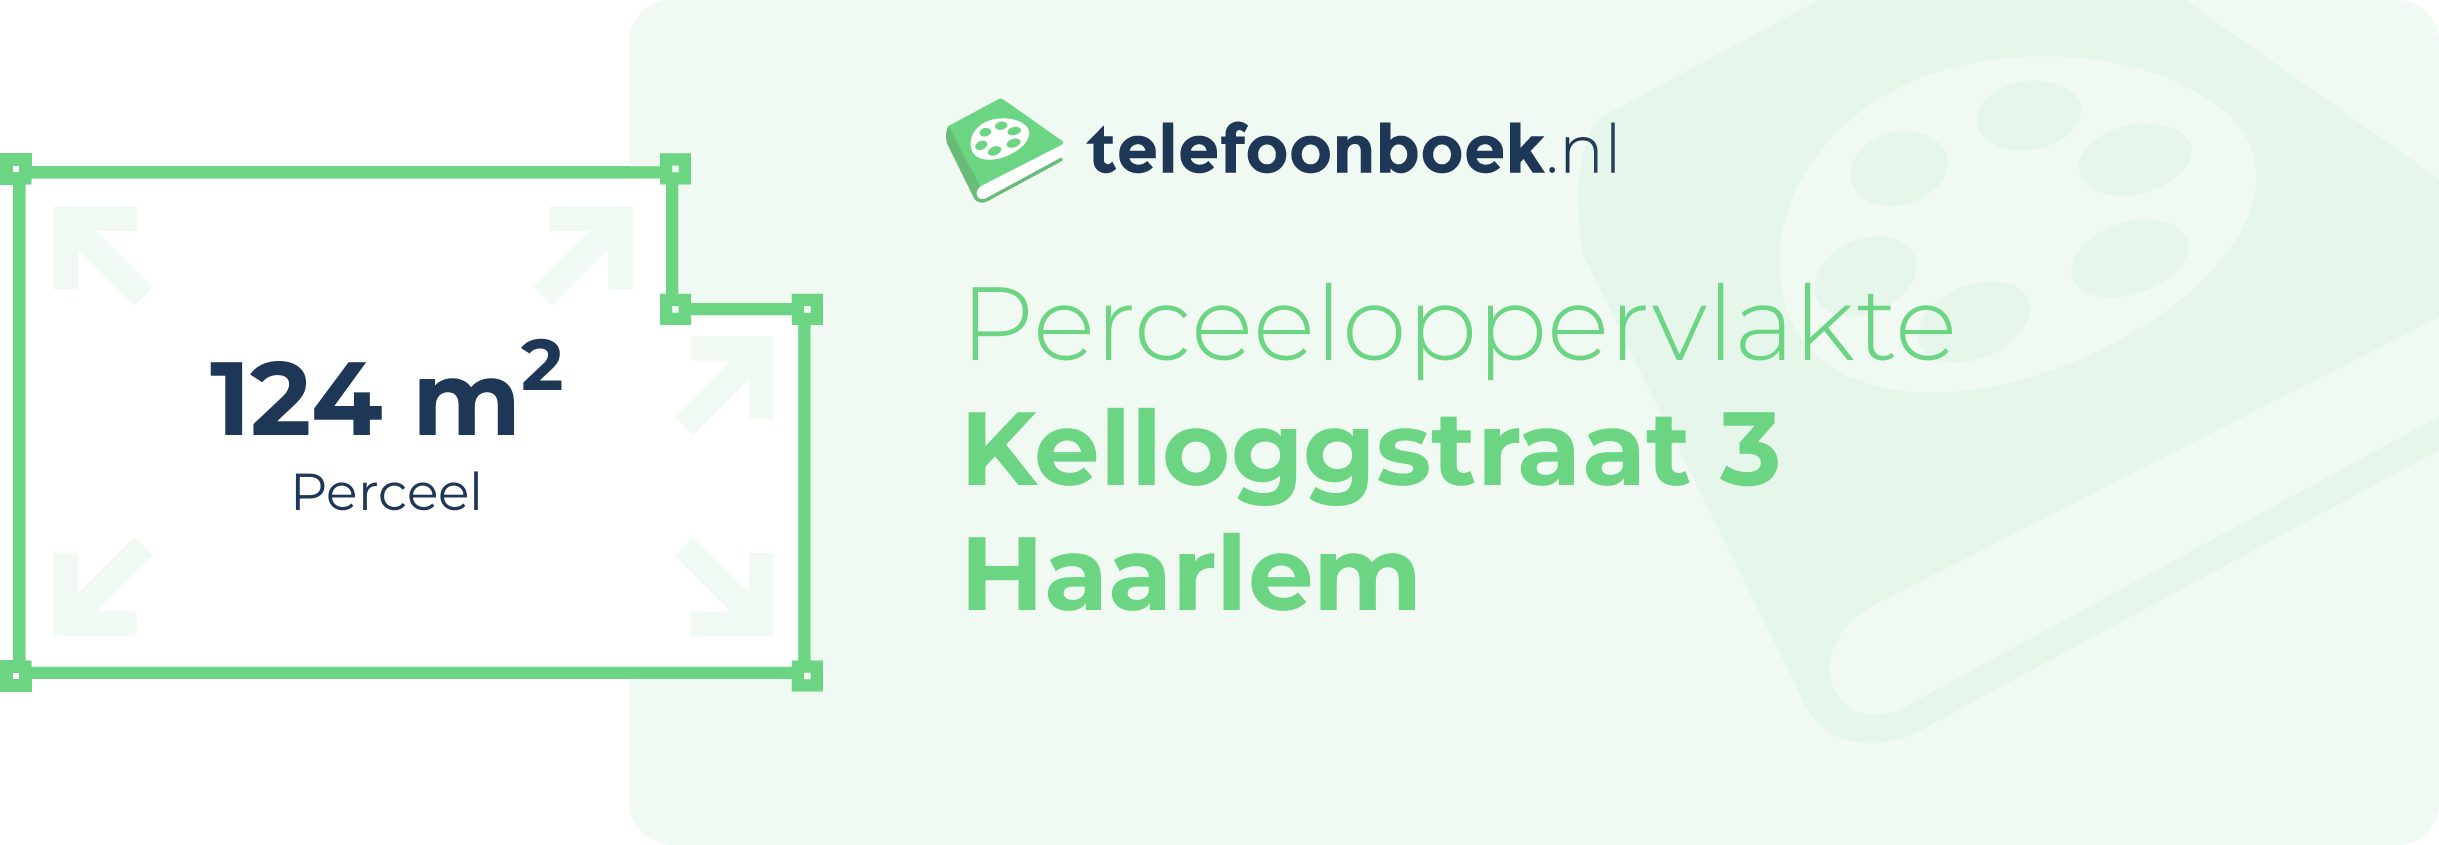 Perceeloppervlakte Kelloggstraat 3 Haarlem